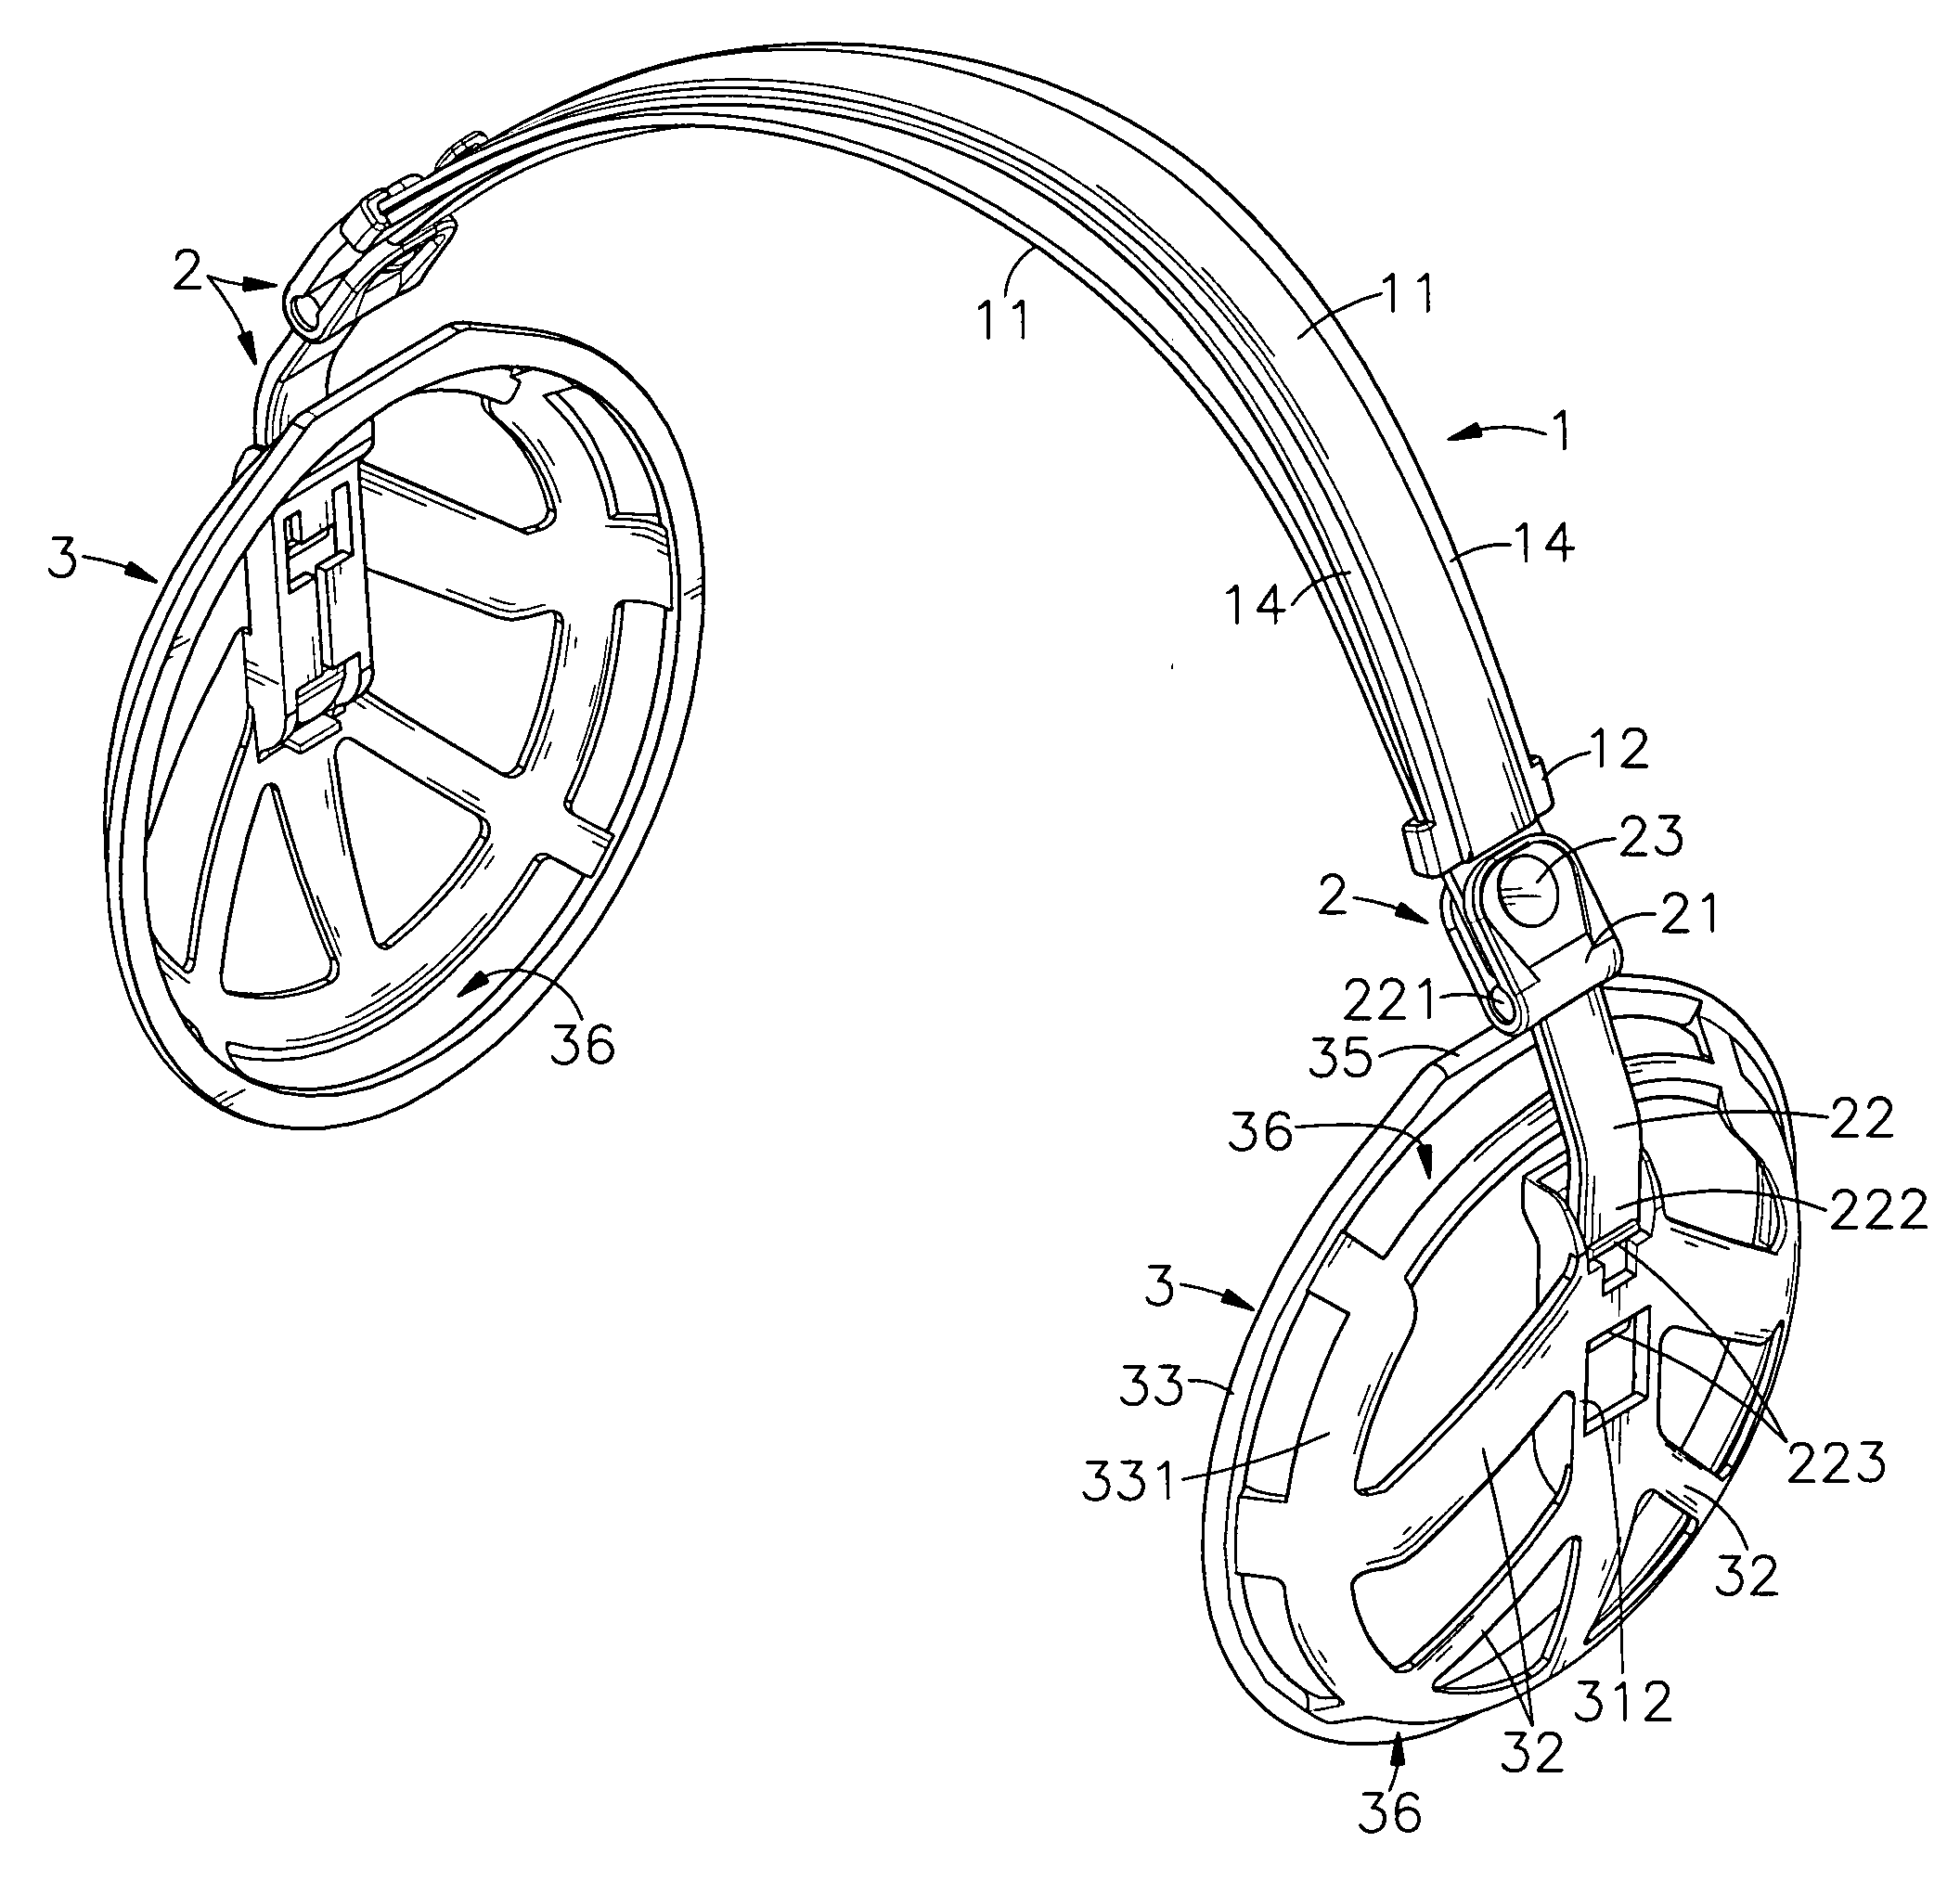 Earmuff device